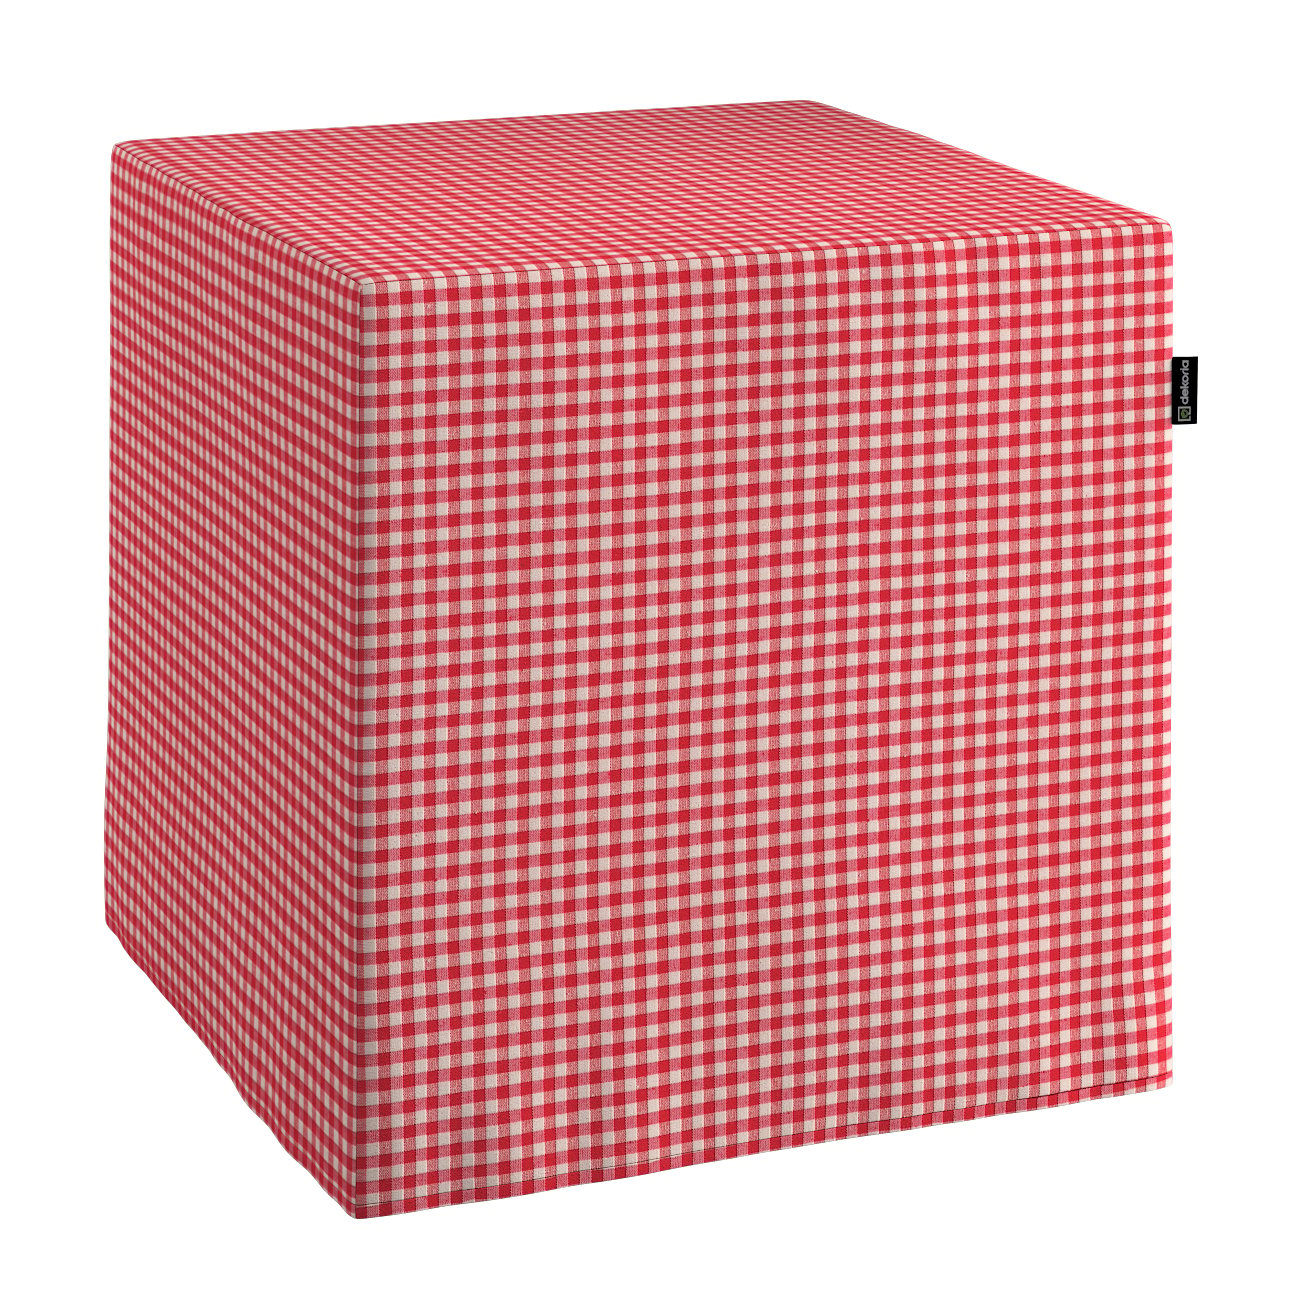 E-shop Dekoria Taburetka tvrdá, kocka, červeno-biele malé káro, 40 x 40 x 40 cm, Quadro, 136-15